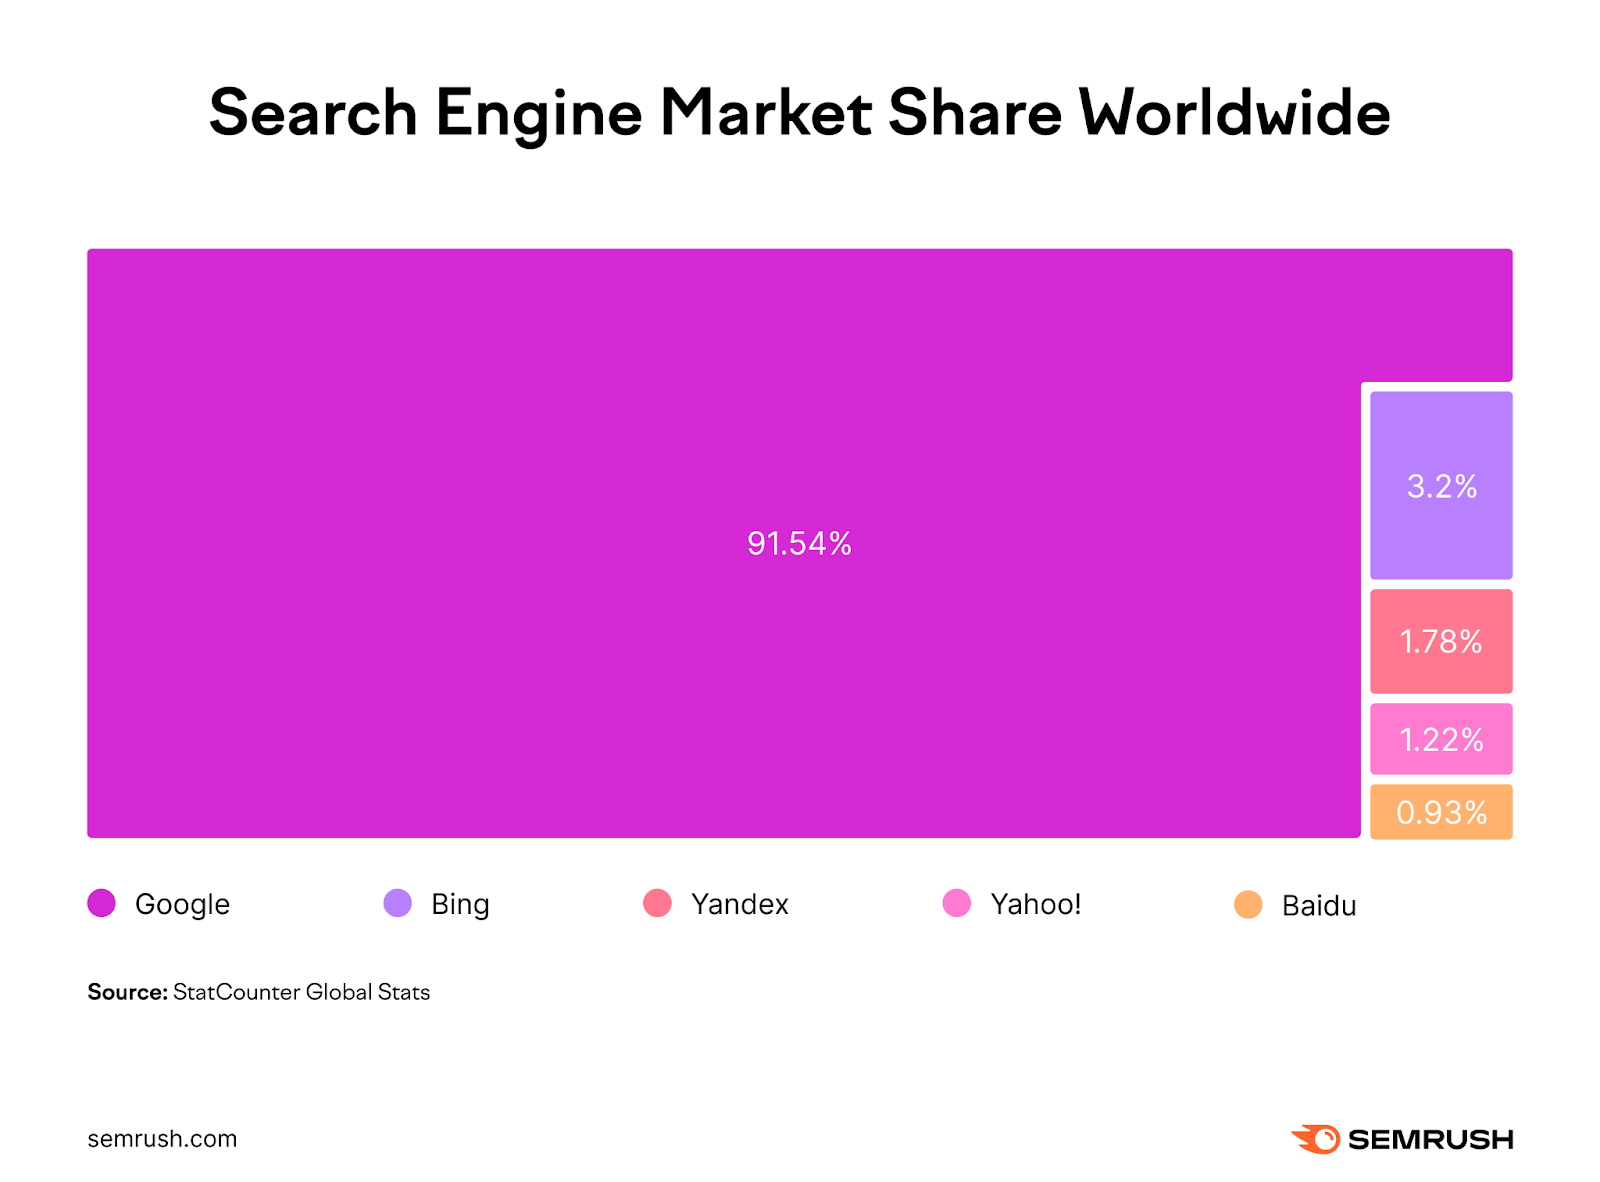 Search engine market share worldwide